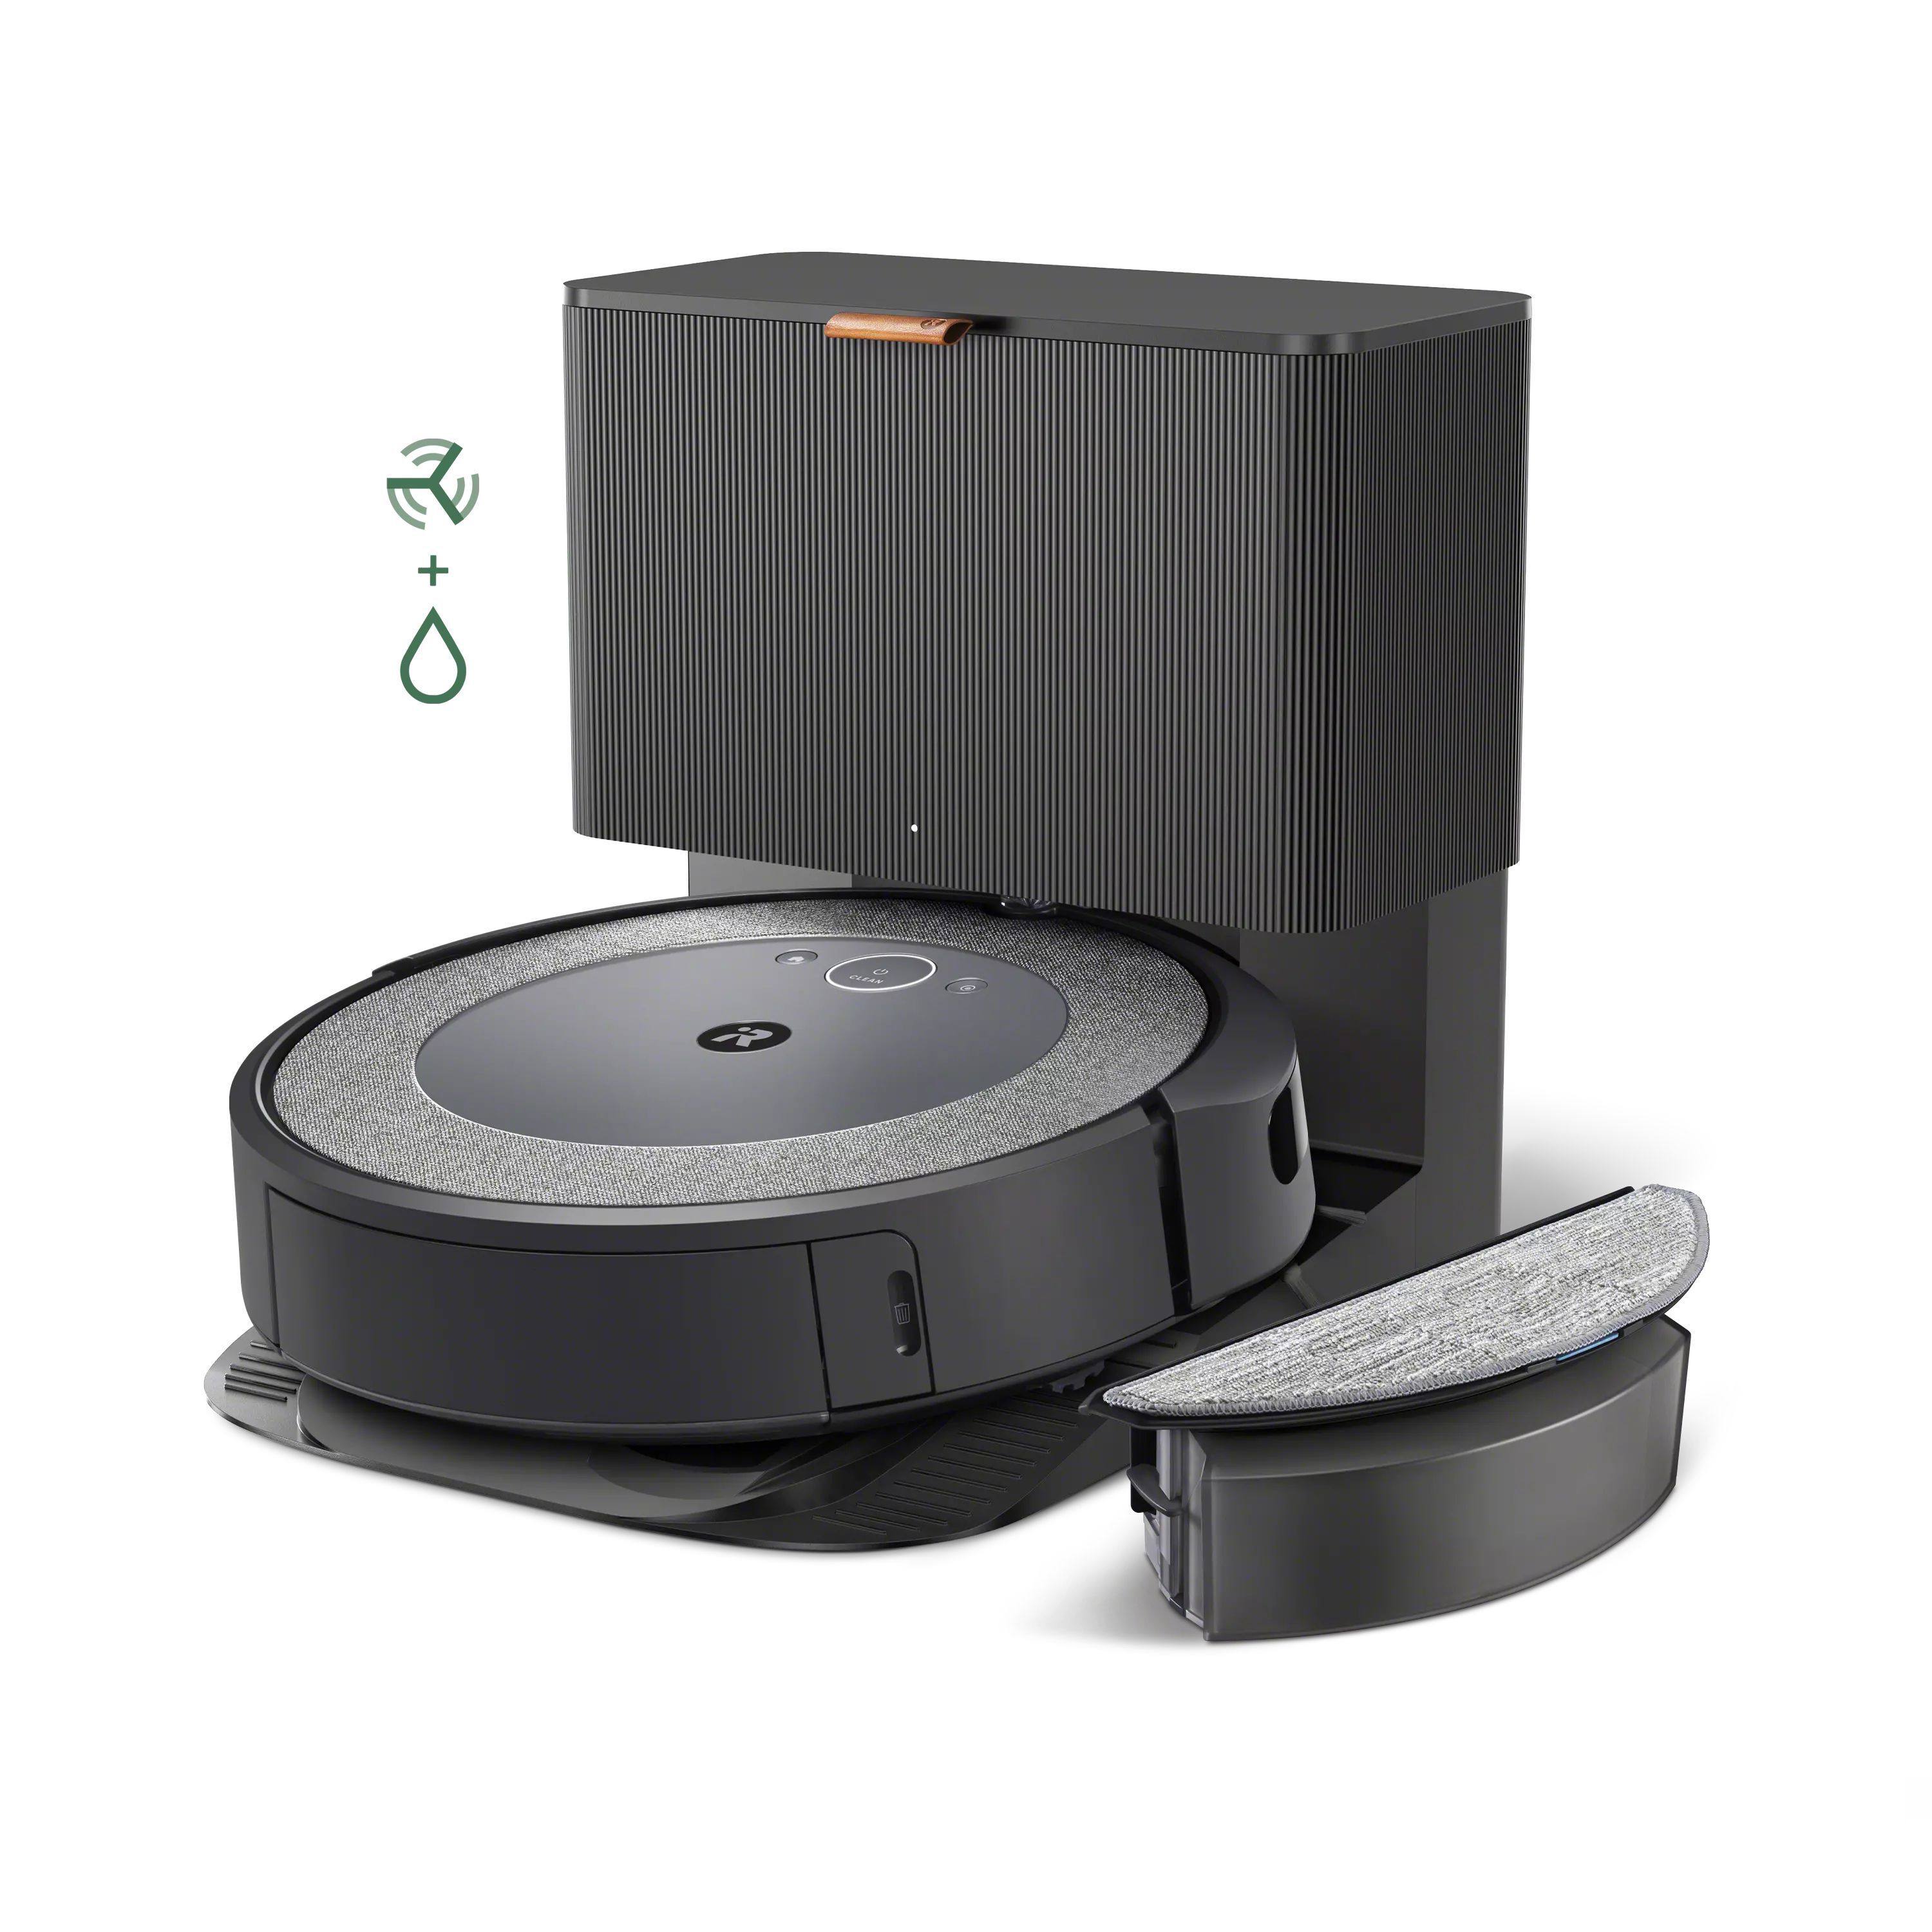 Roomba® Robot Vacuum Cleaners | iRobot®